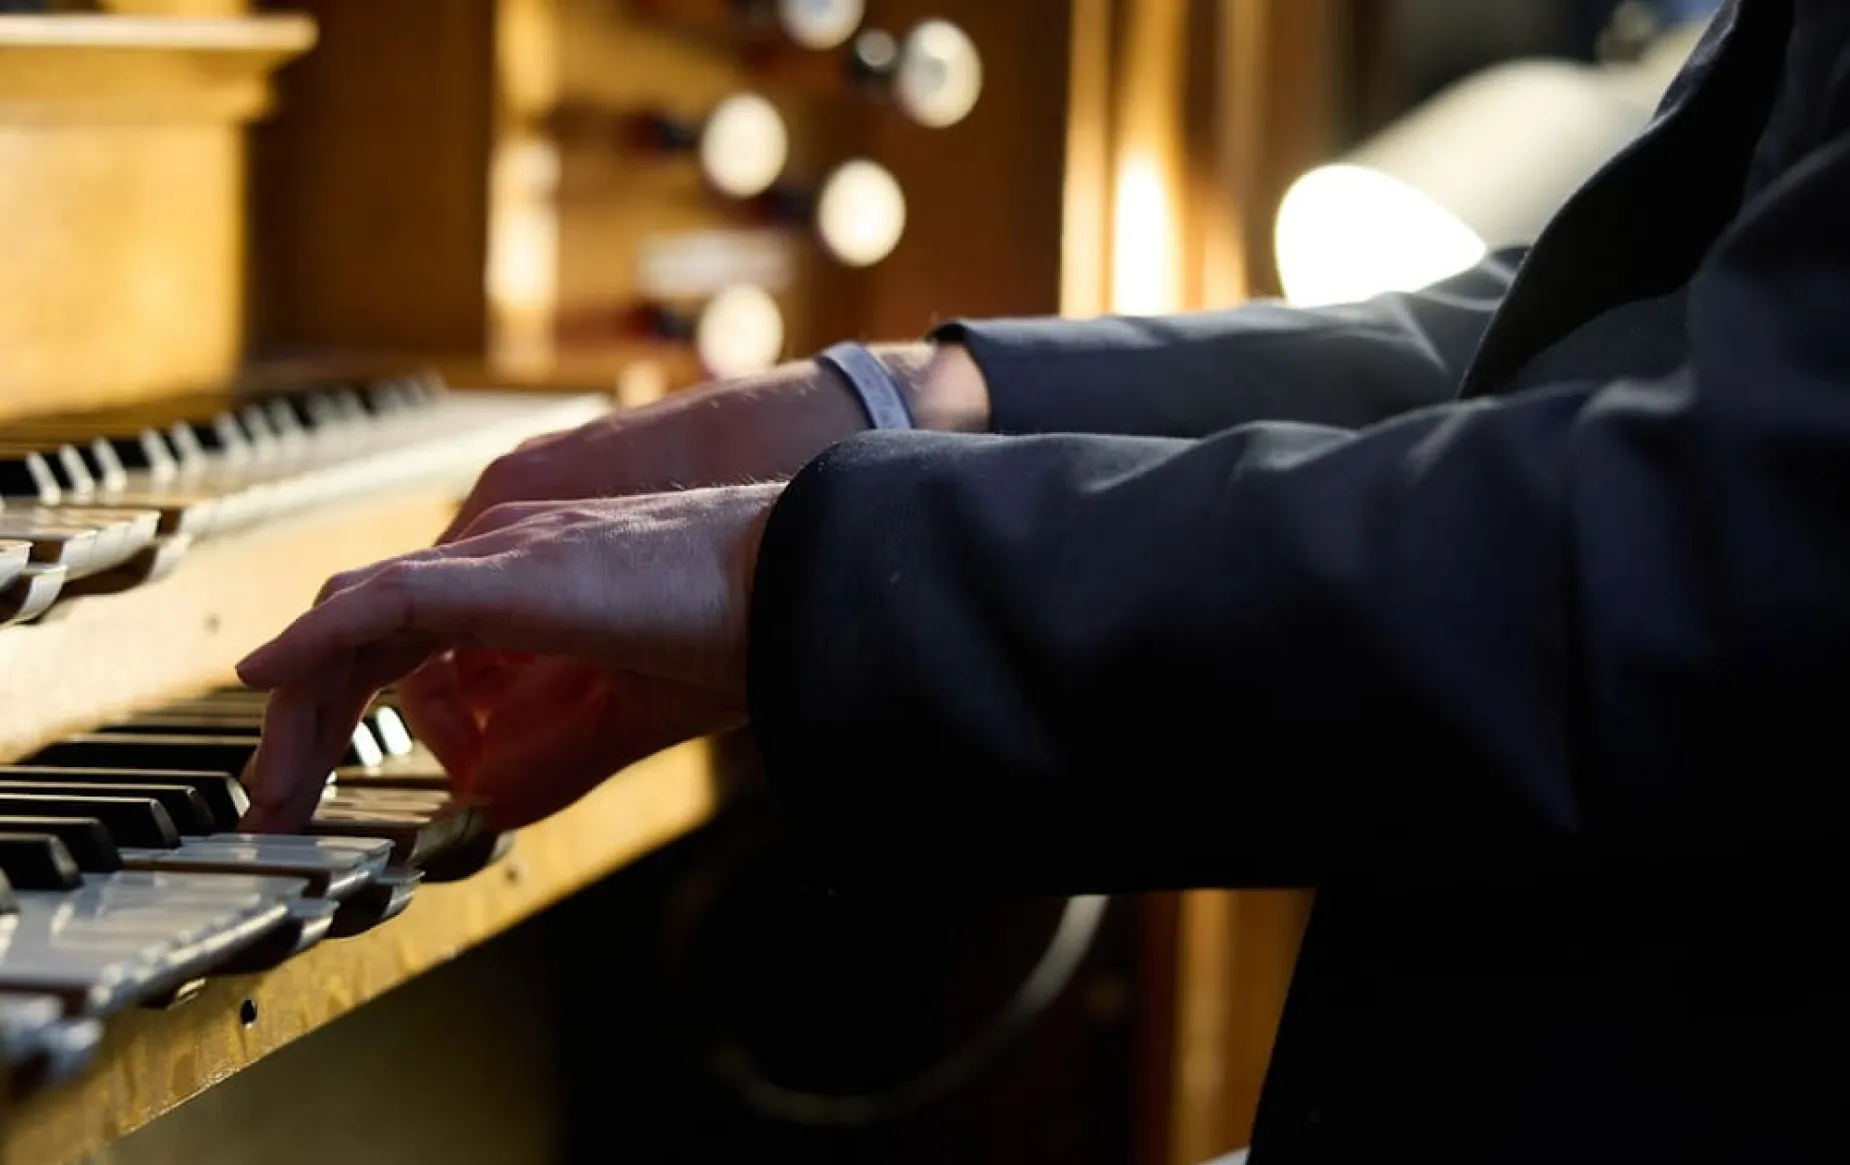 Organist's hands on the keys